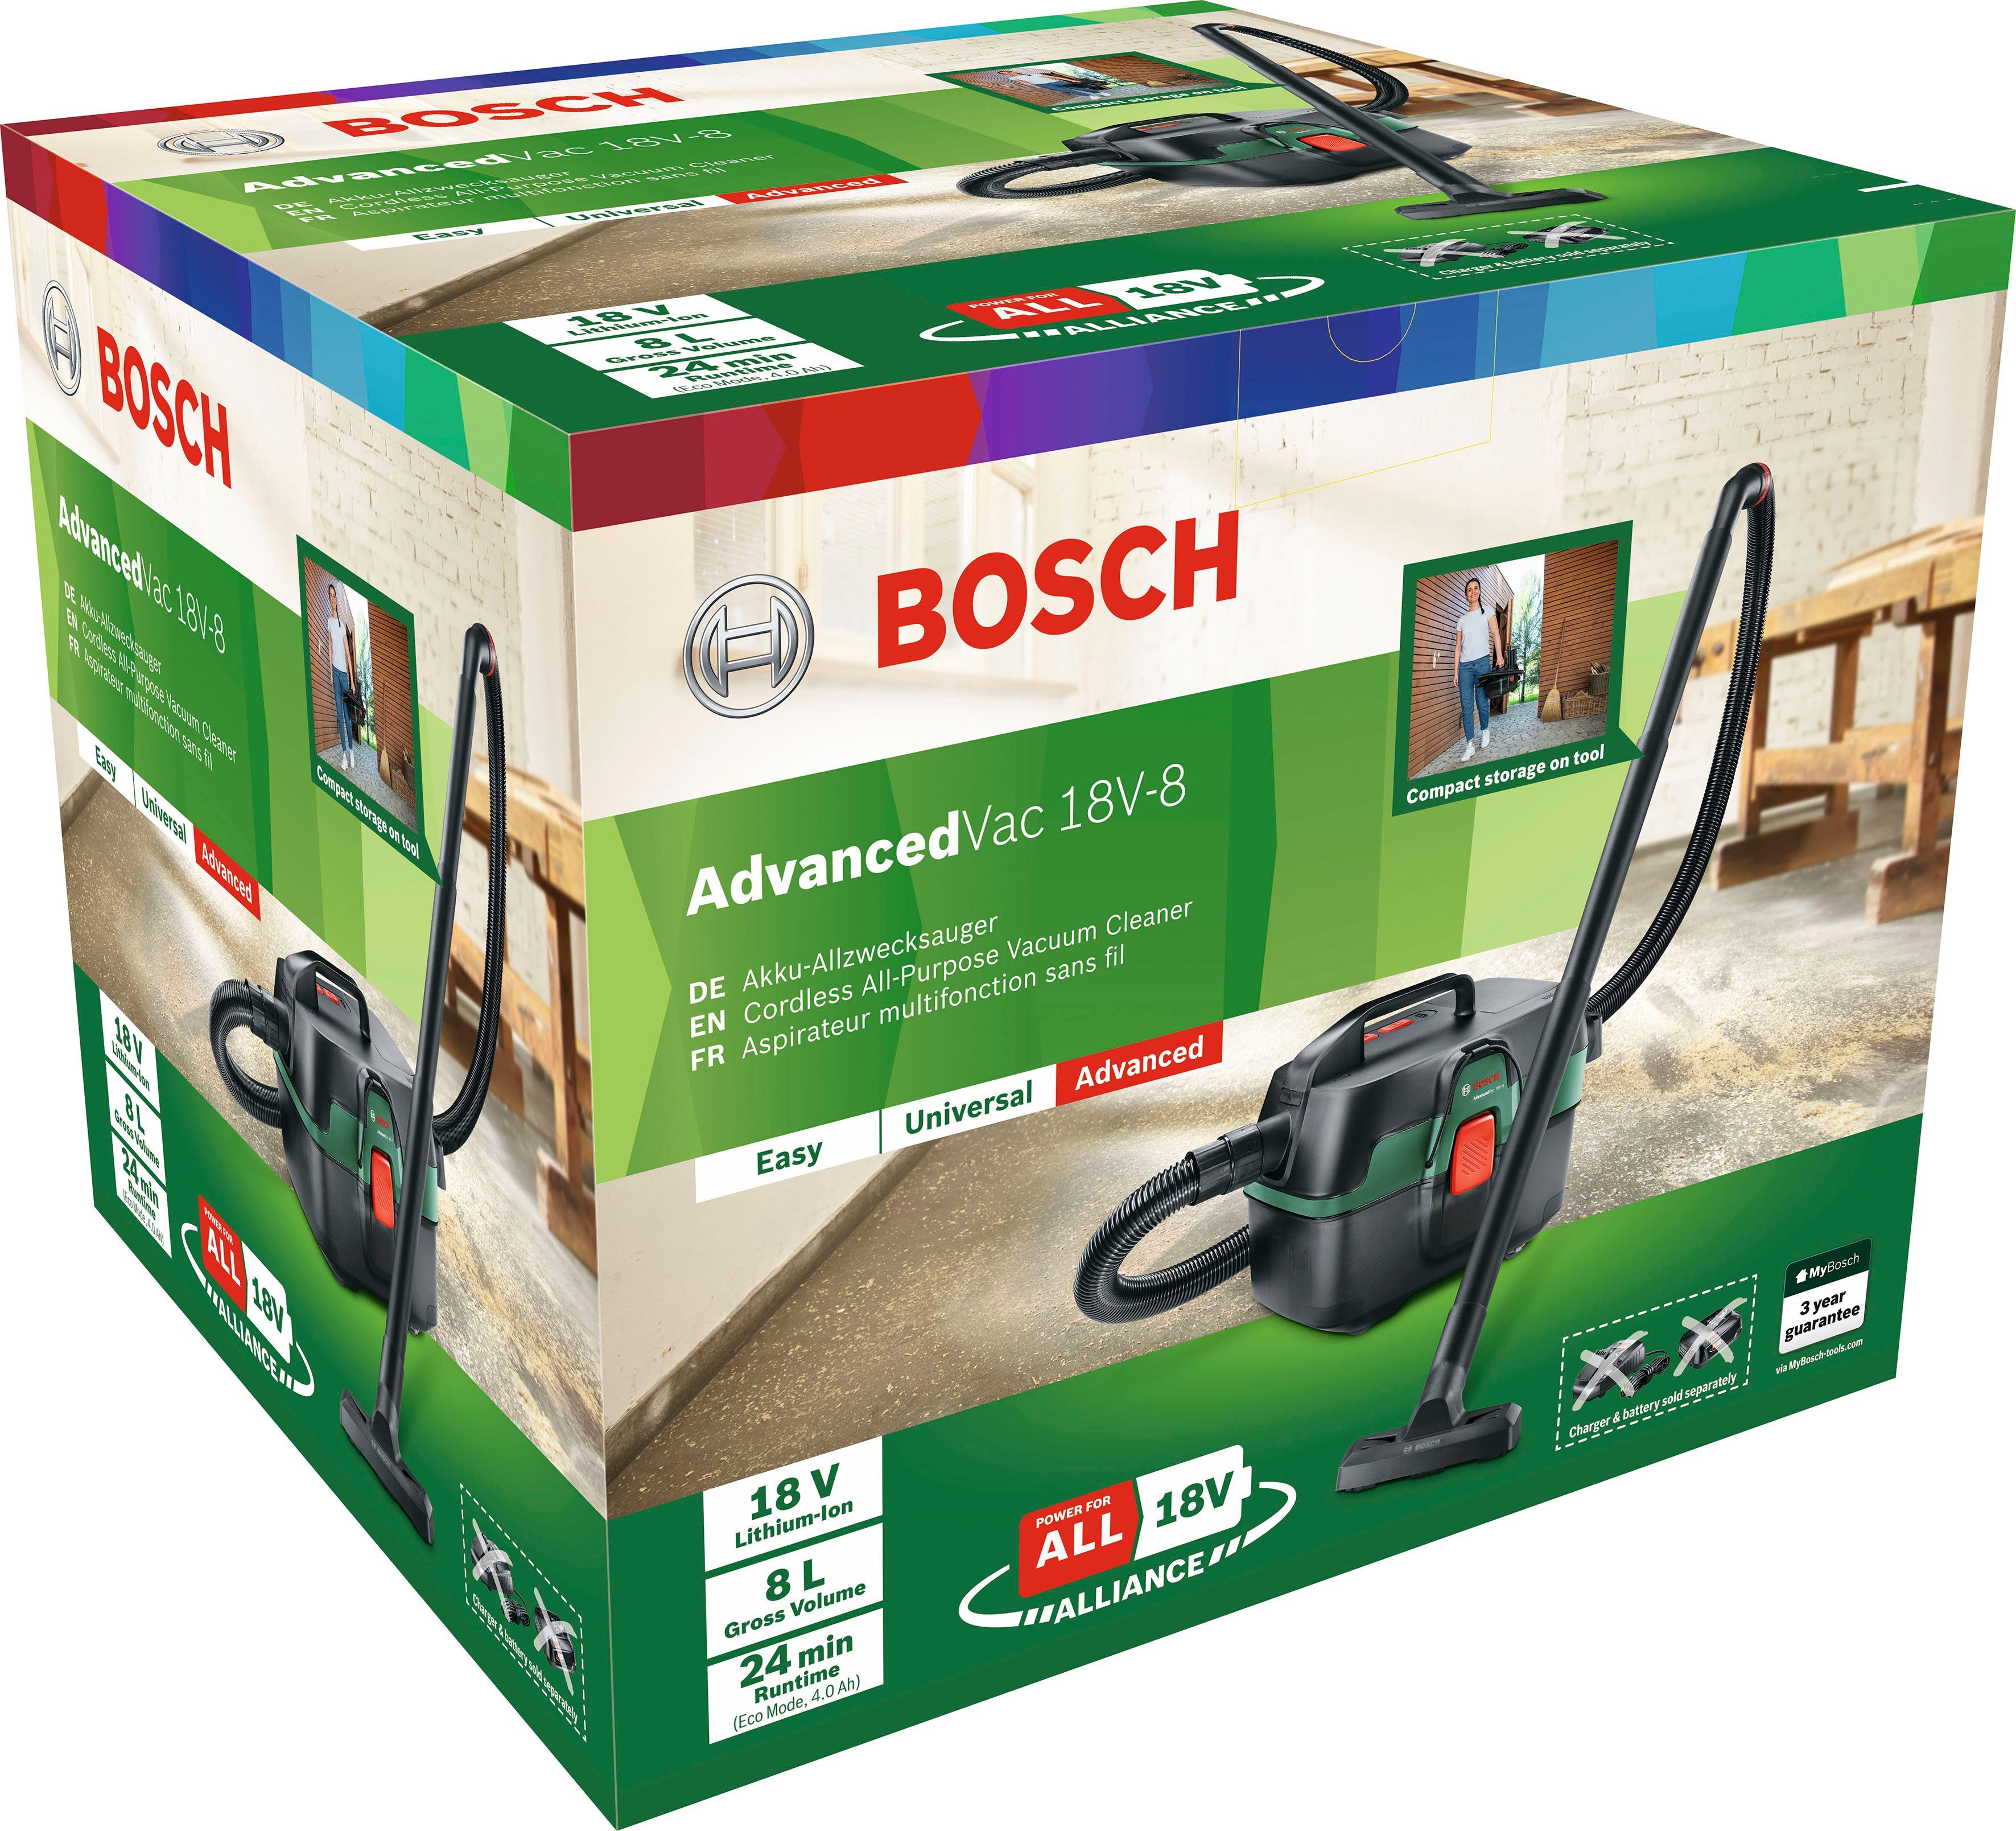 Garden Akku ohne & und Home Beutel, Bosch Ladegerät 18V-8, mit Nass-Trocken-Akkusauger AdvancedVac